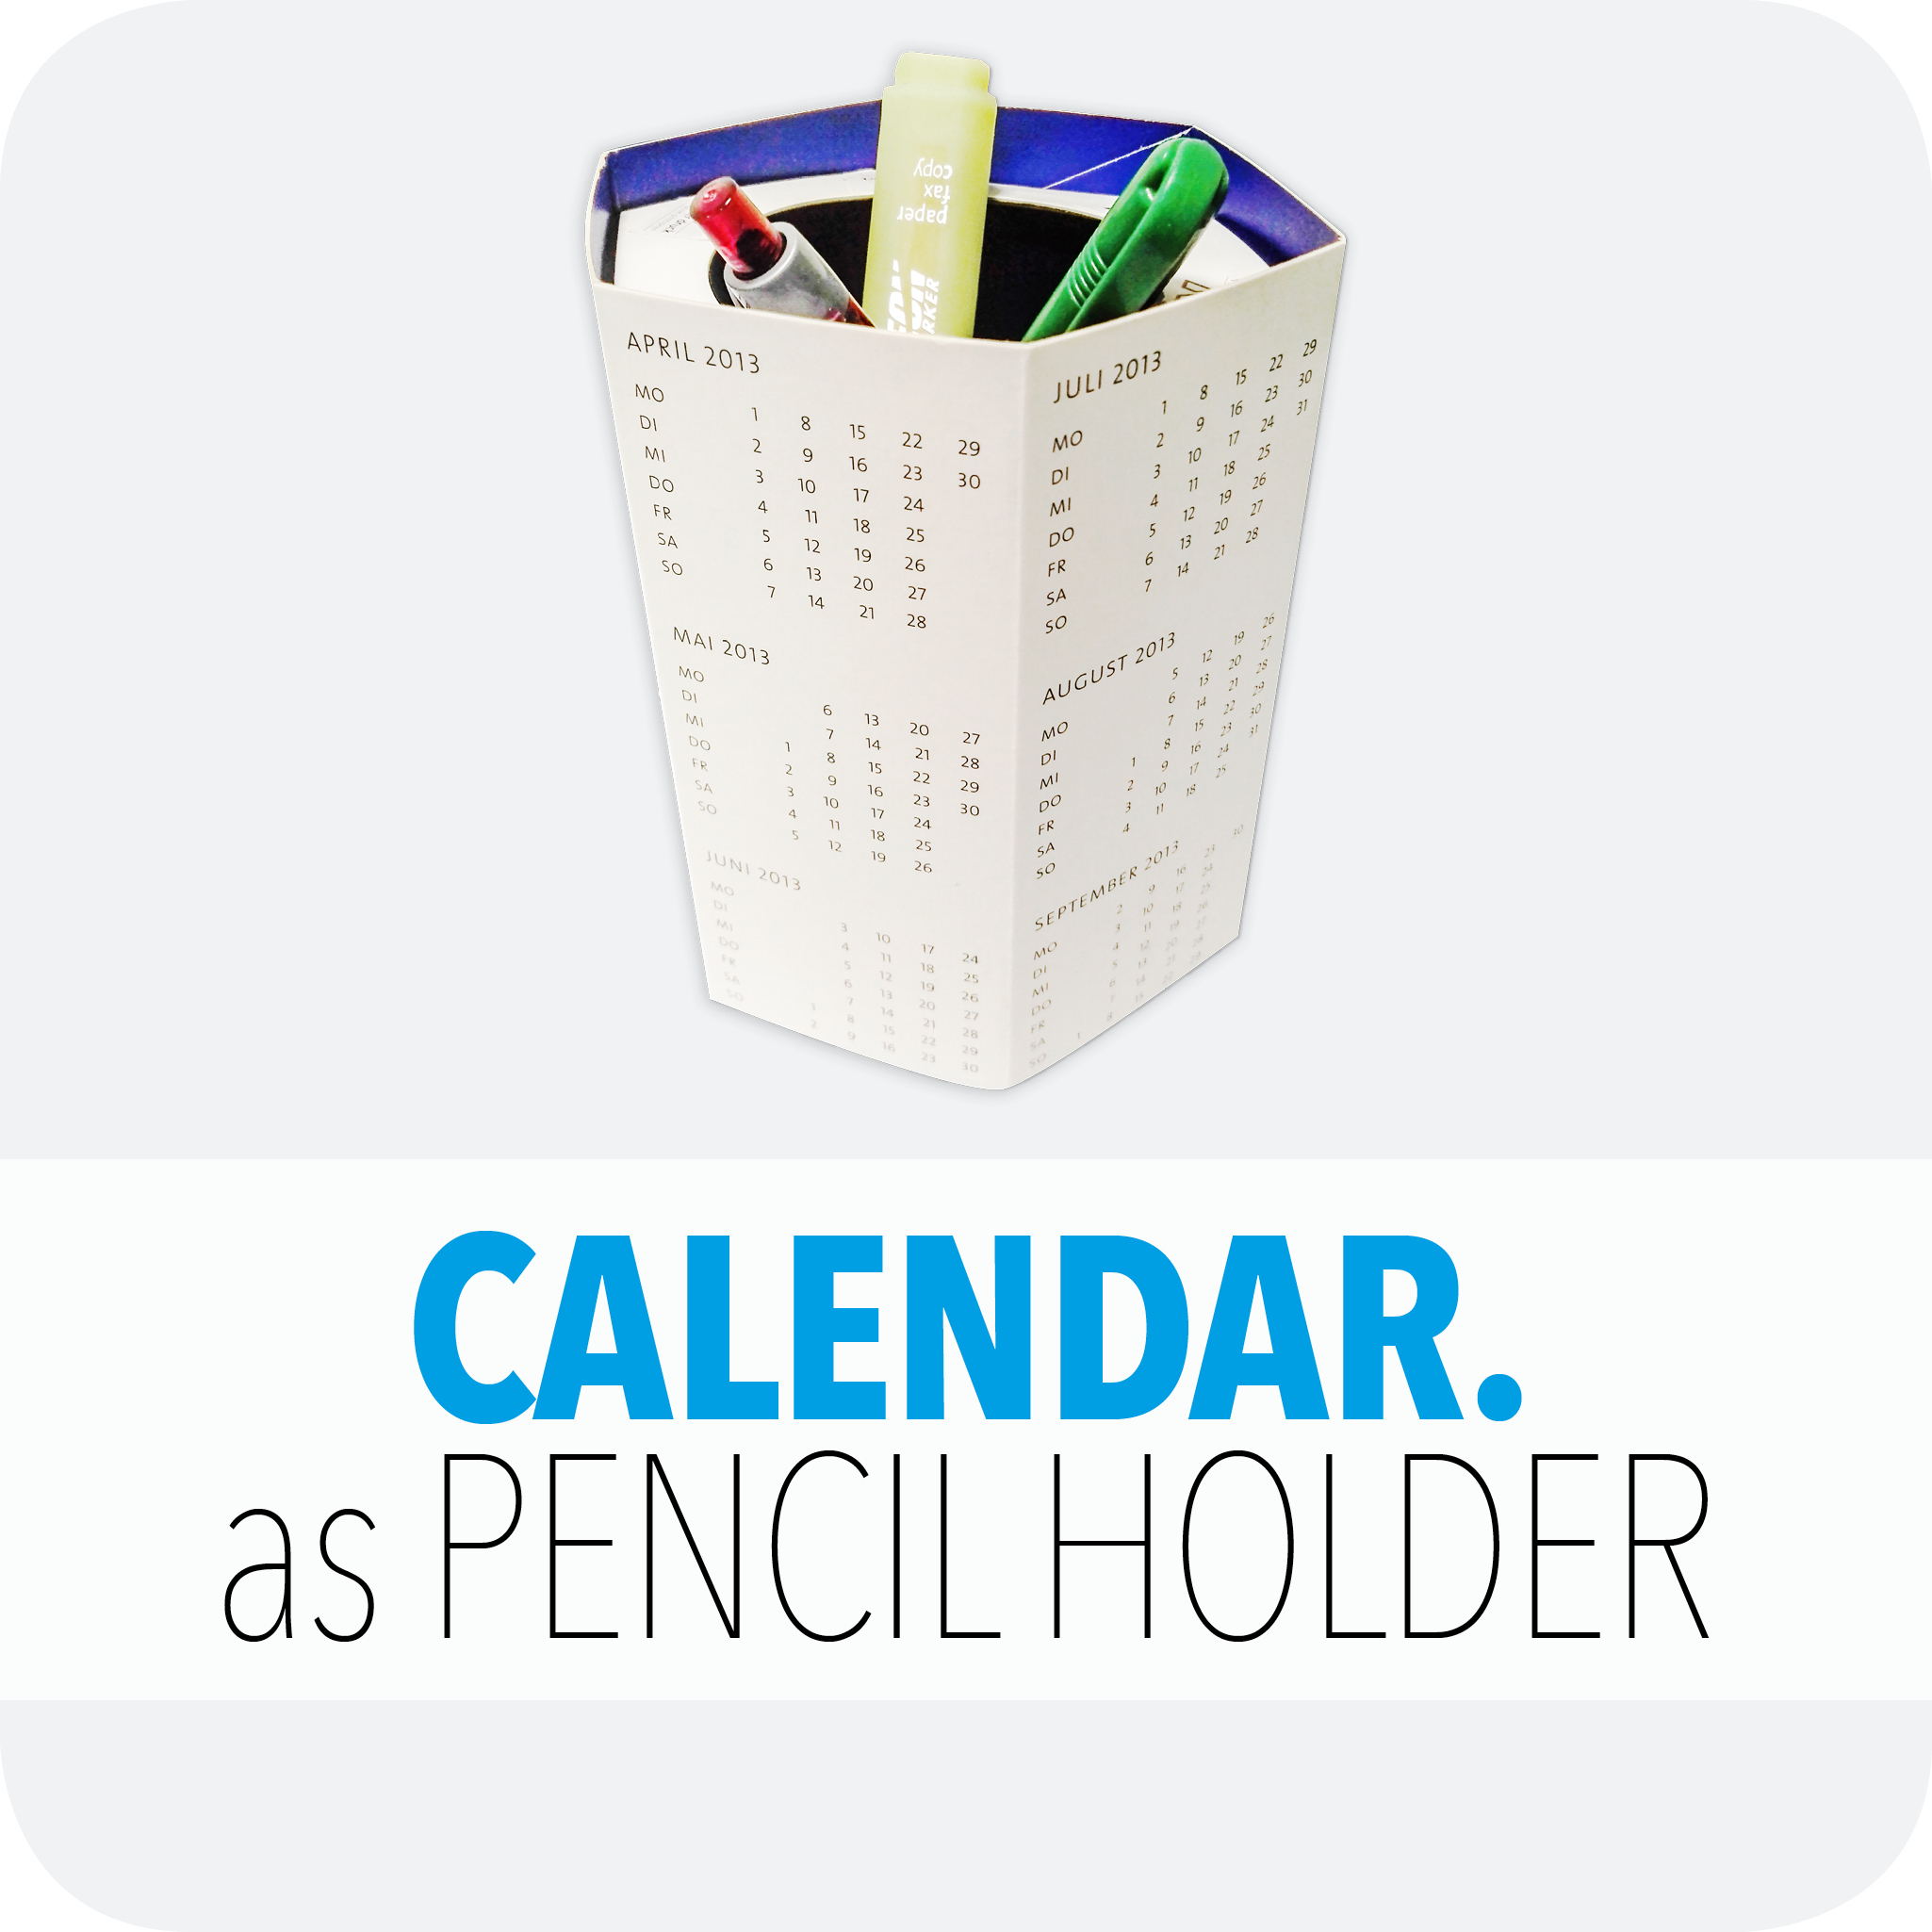 Calendar as pencil holder